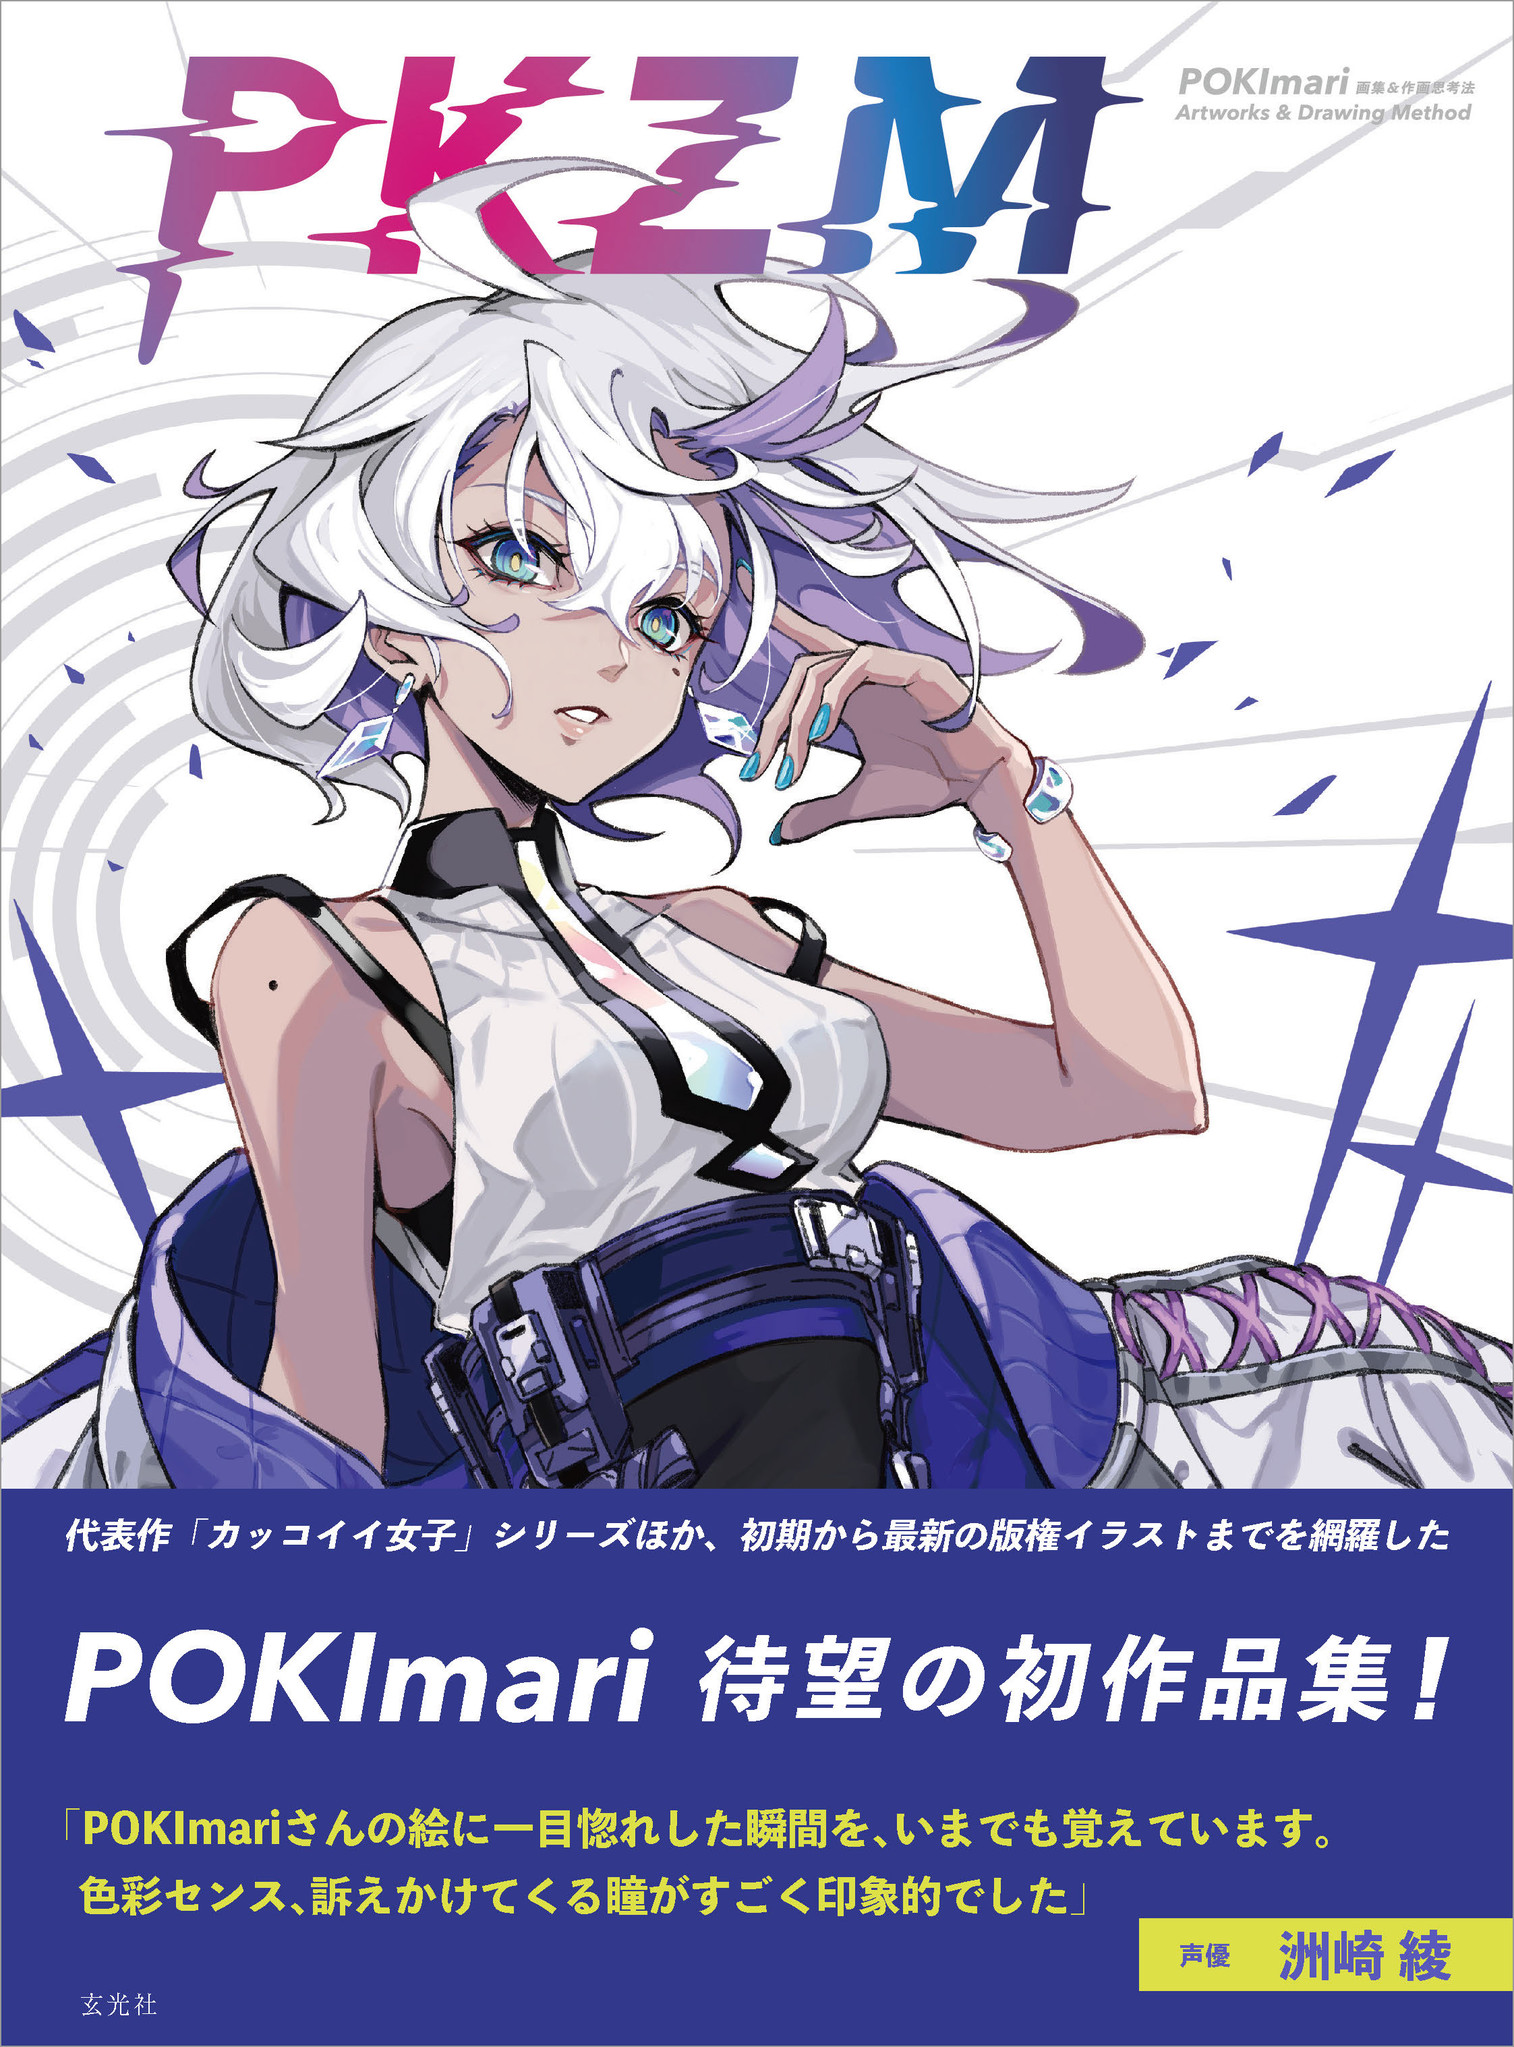 Pokimari 待望の初作品集出版 株式会社玄光社のプレスリリース